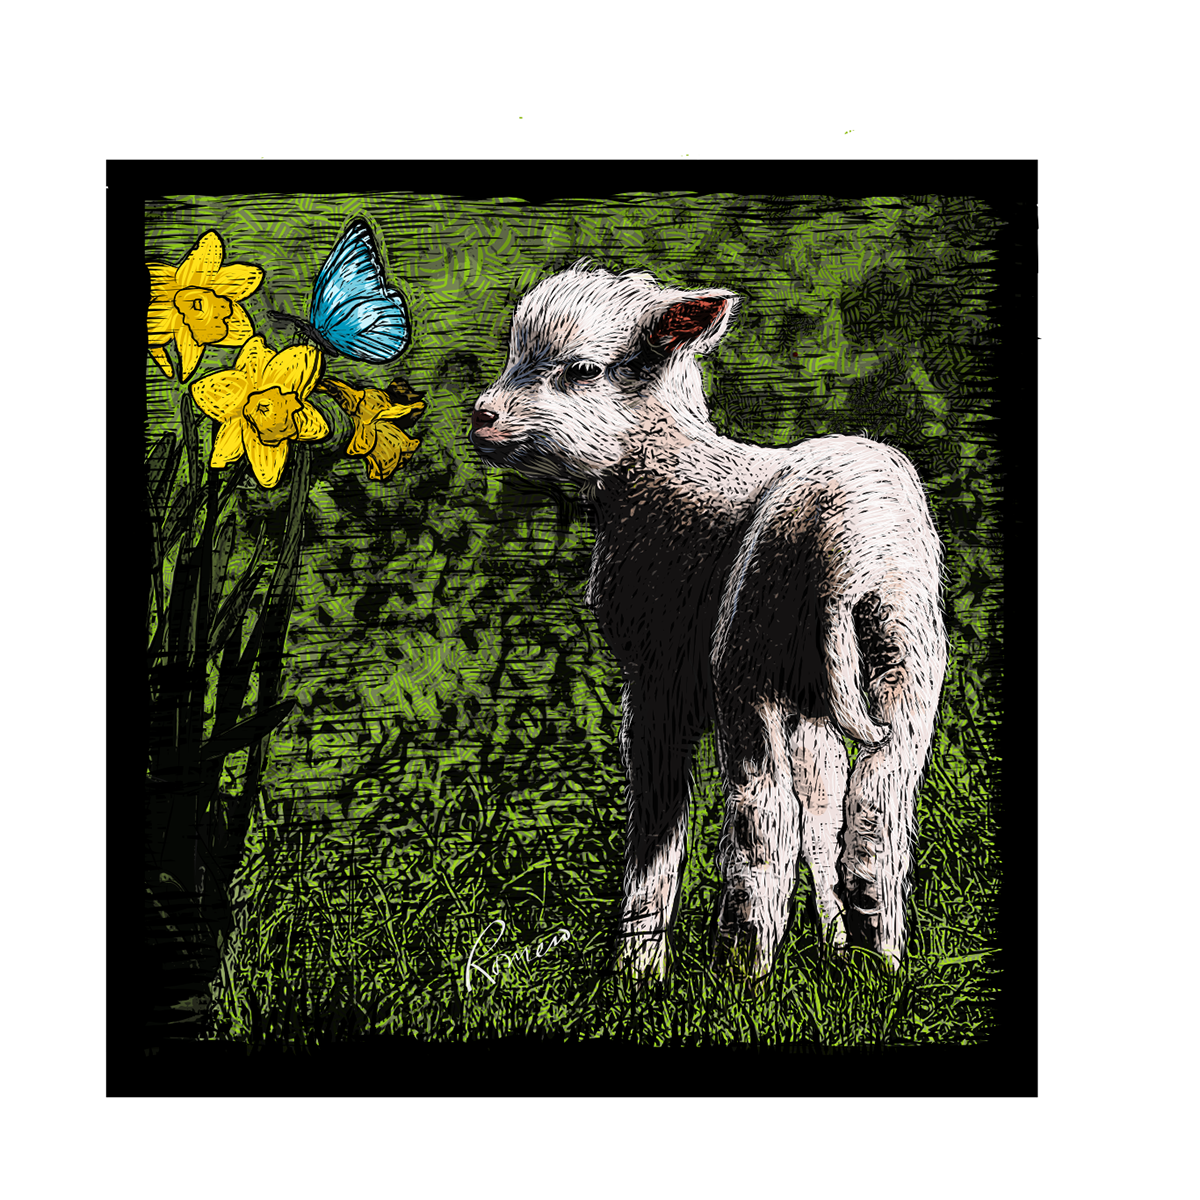 adobedraw spring Passover Easter atonement lamb sacrifice